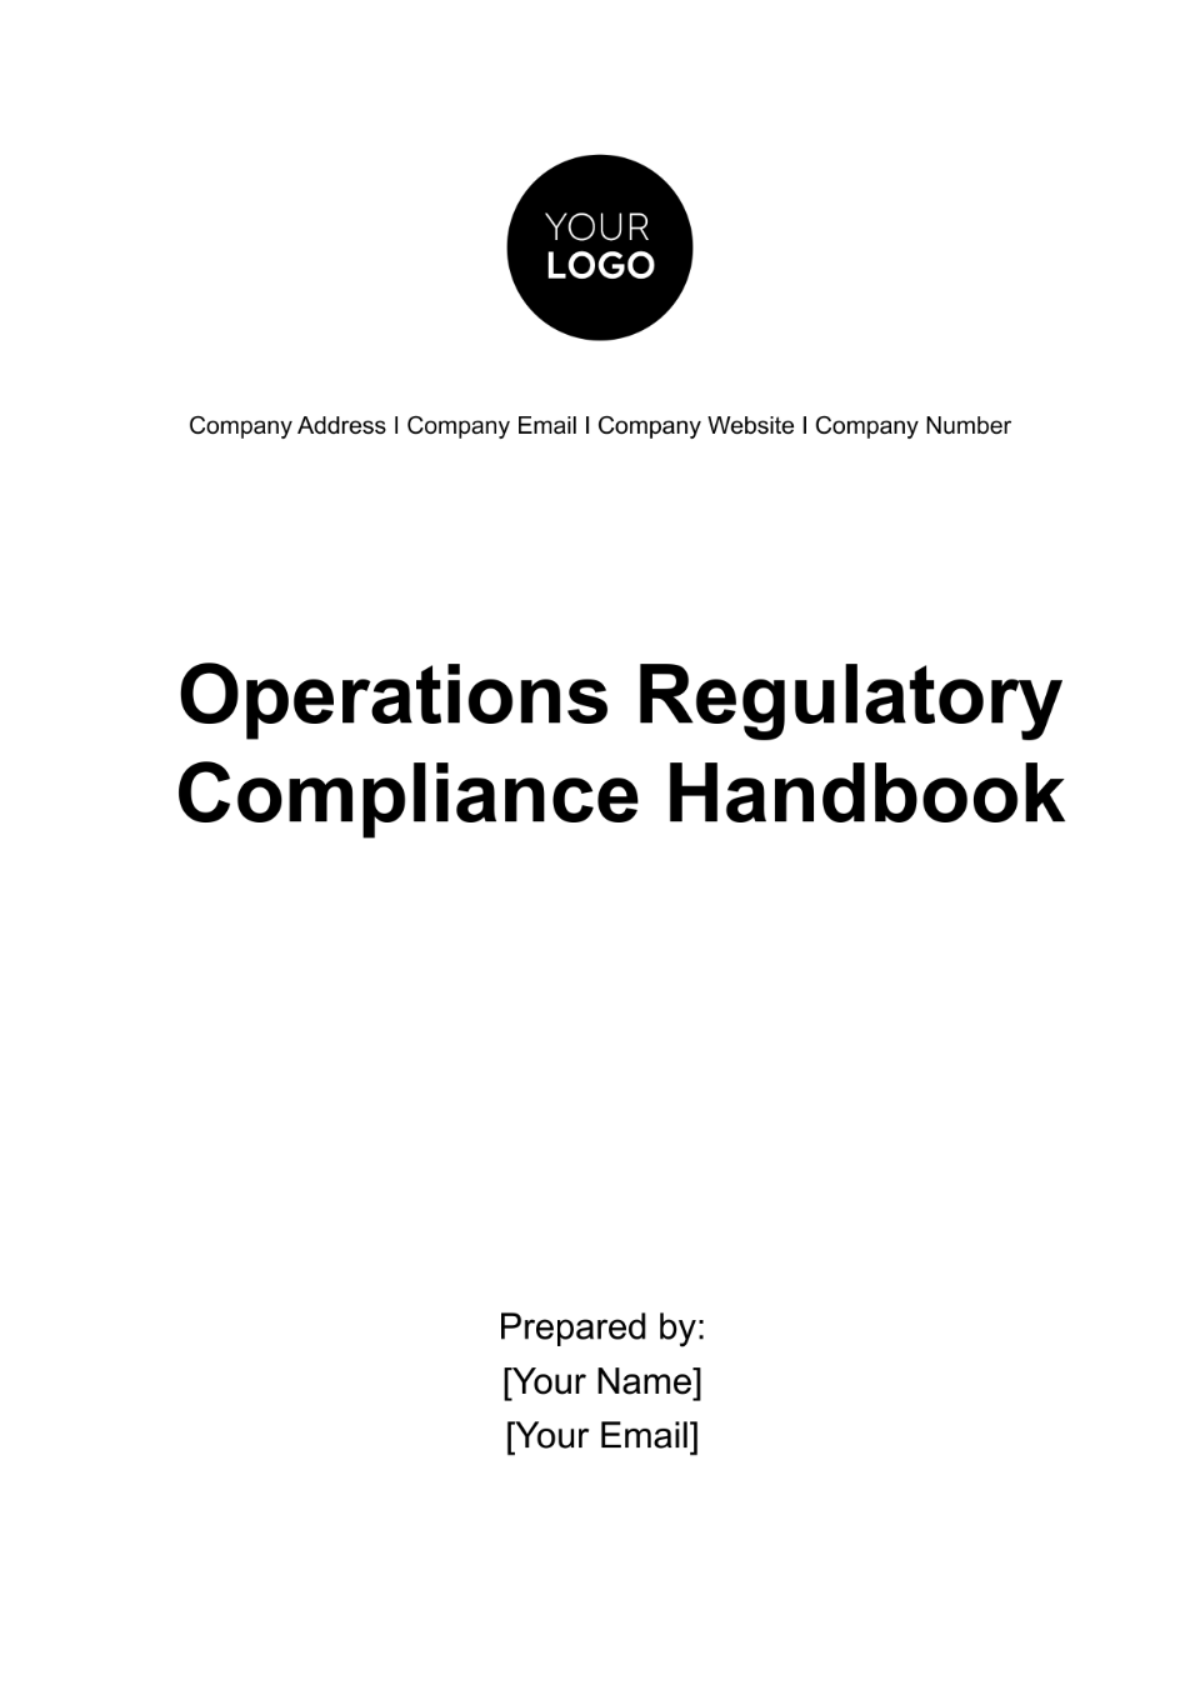 Operations Regulatory Compliance Handbook Template